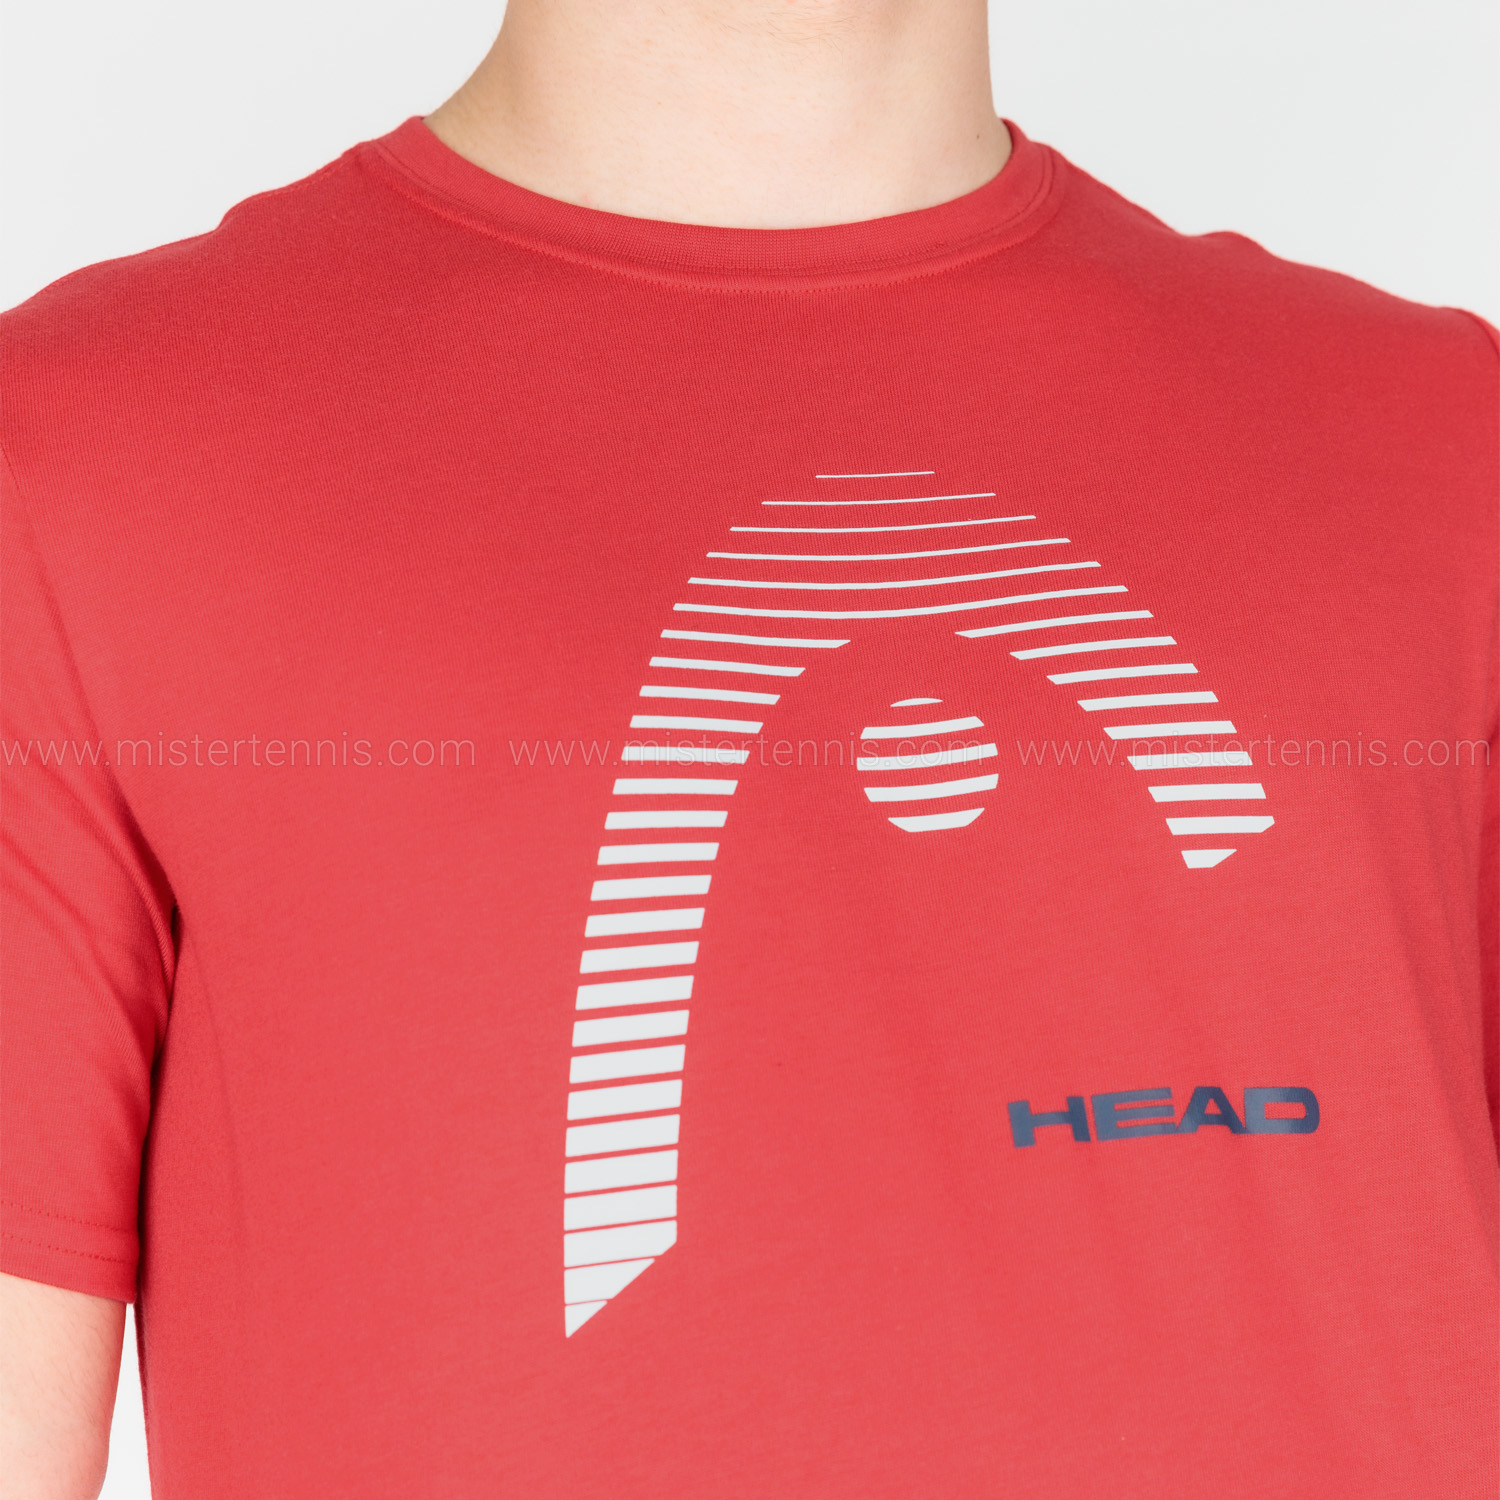 Head Club Carl Camiseta - Red